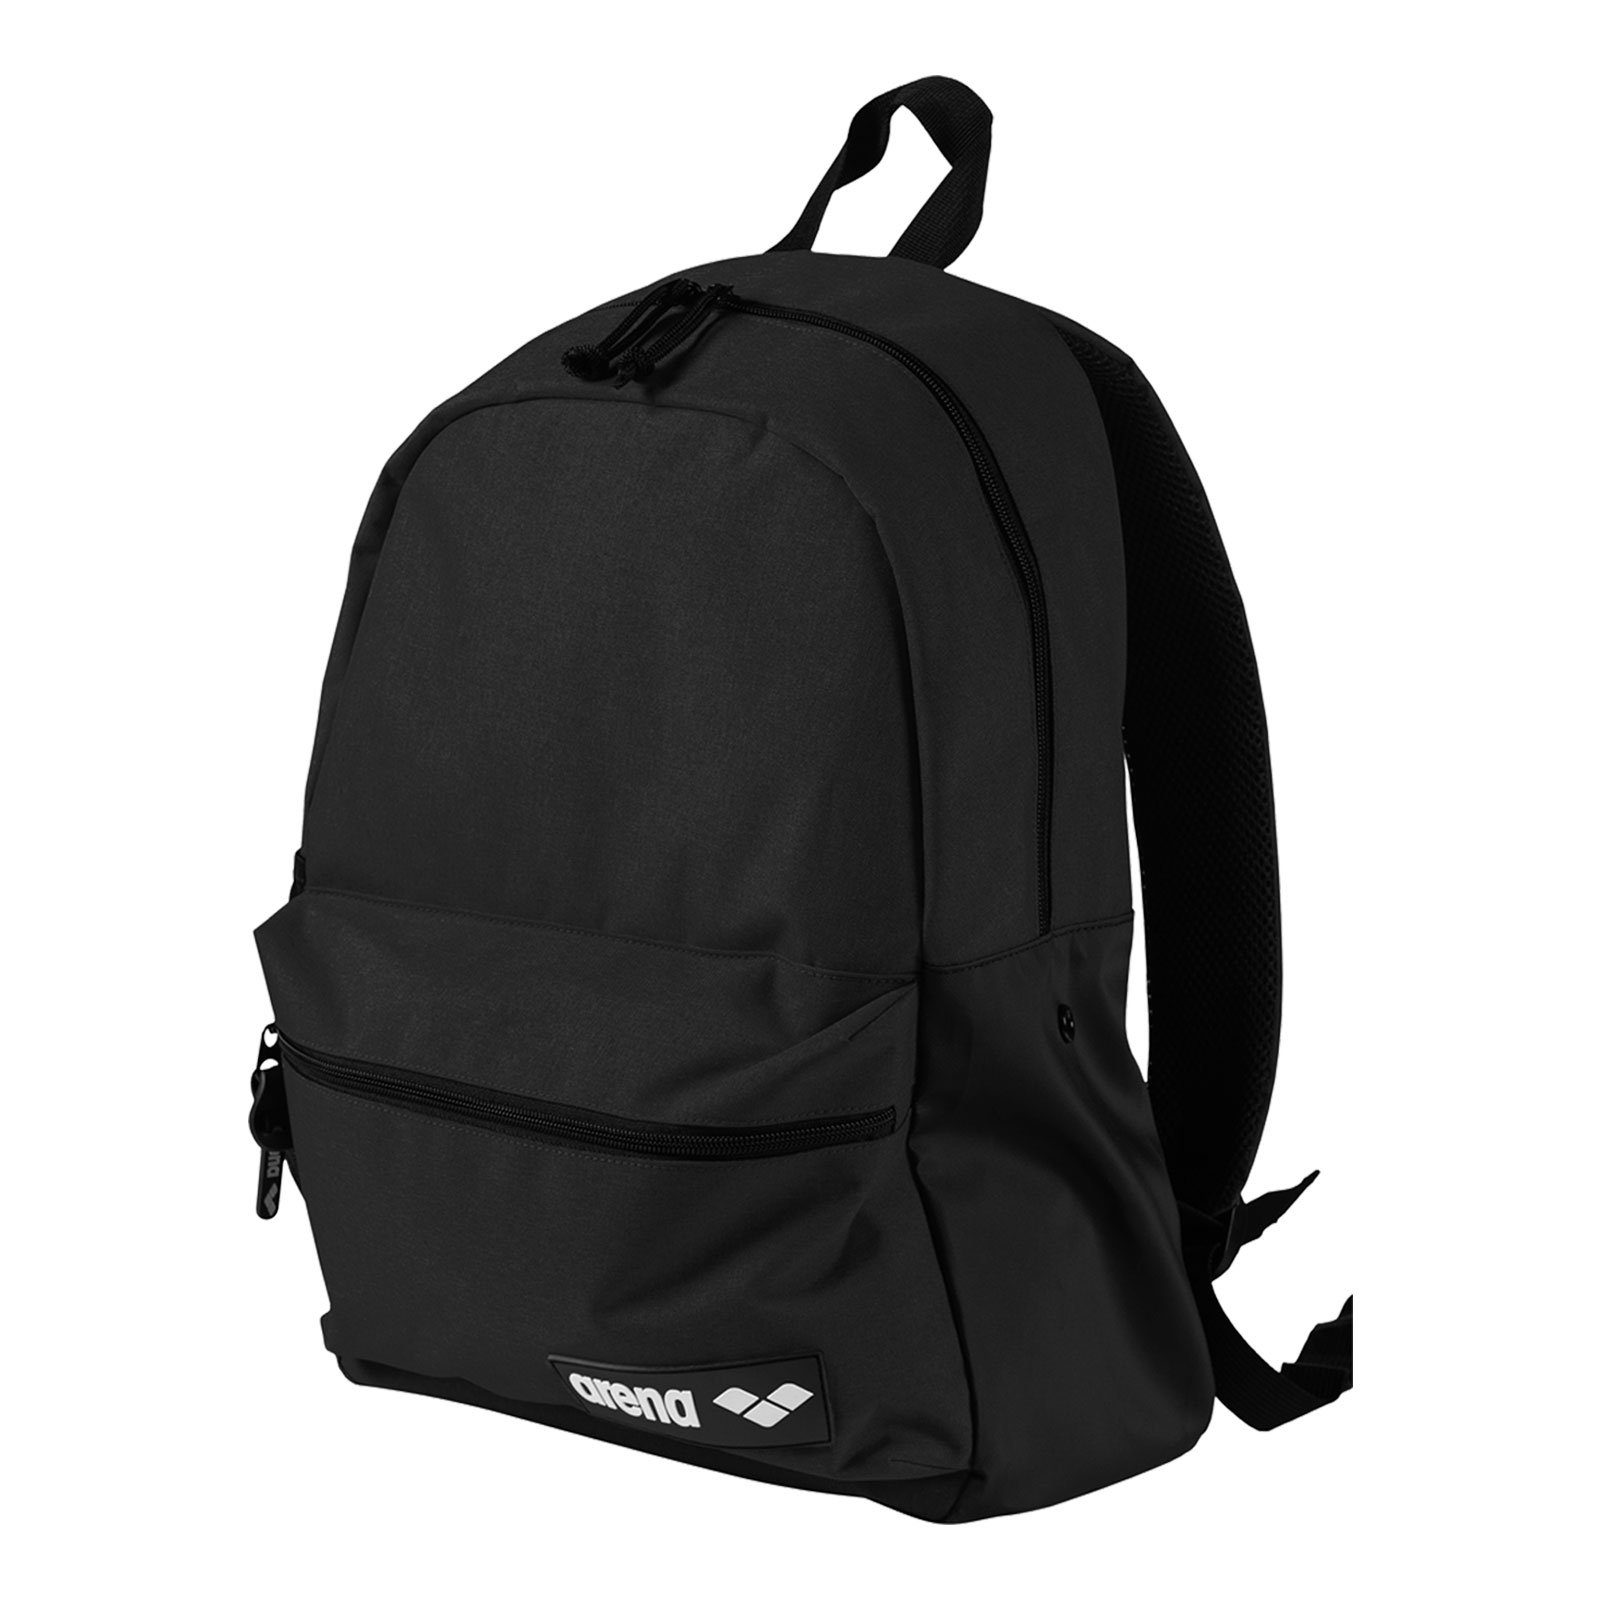 mit Team Arena Beutel 500 black Backpack herausnehmbaren 30, melange Freizeitrucksack